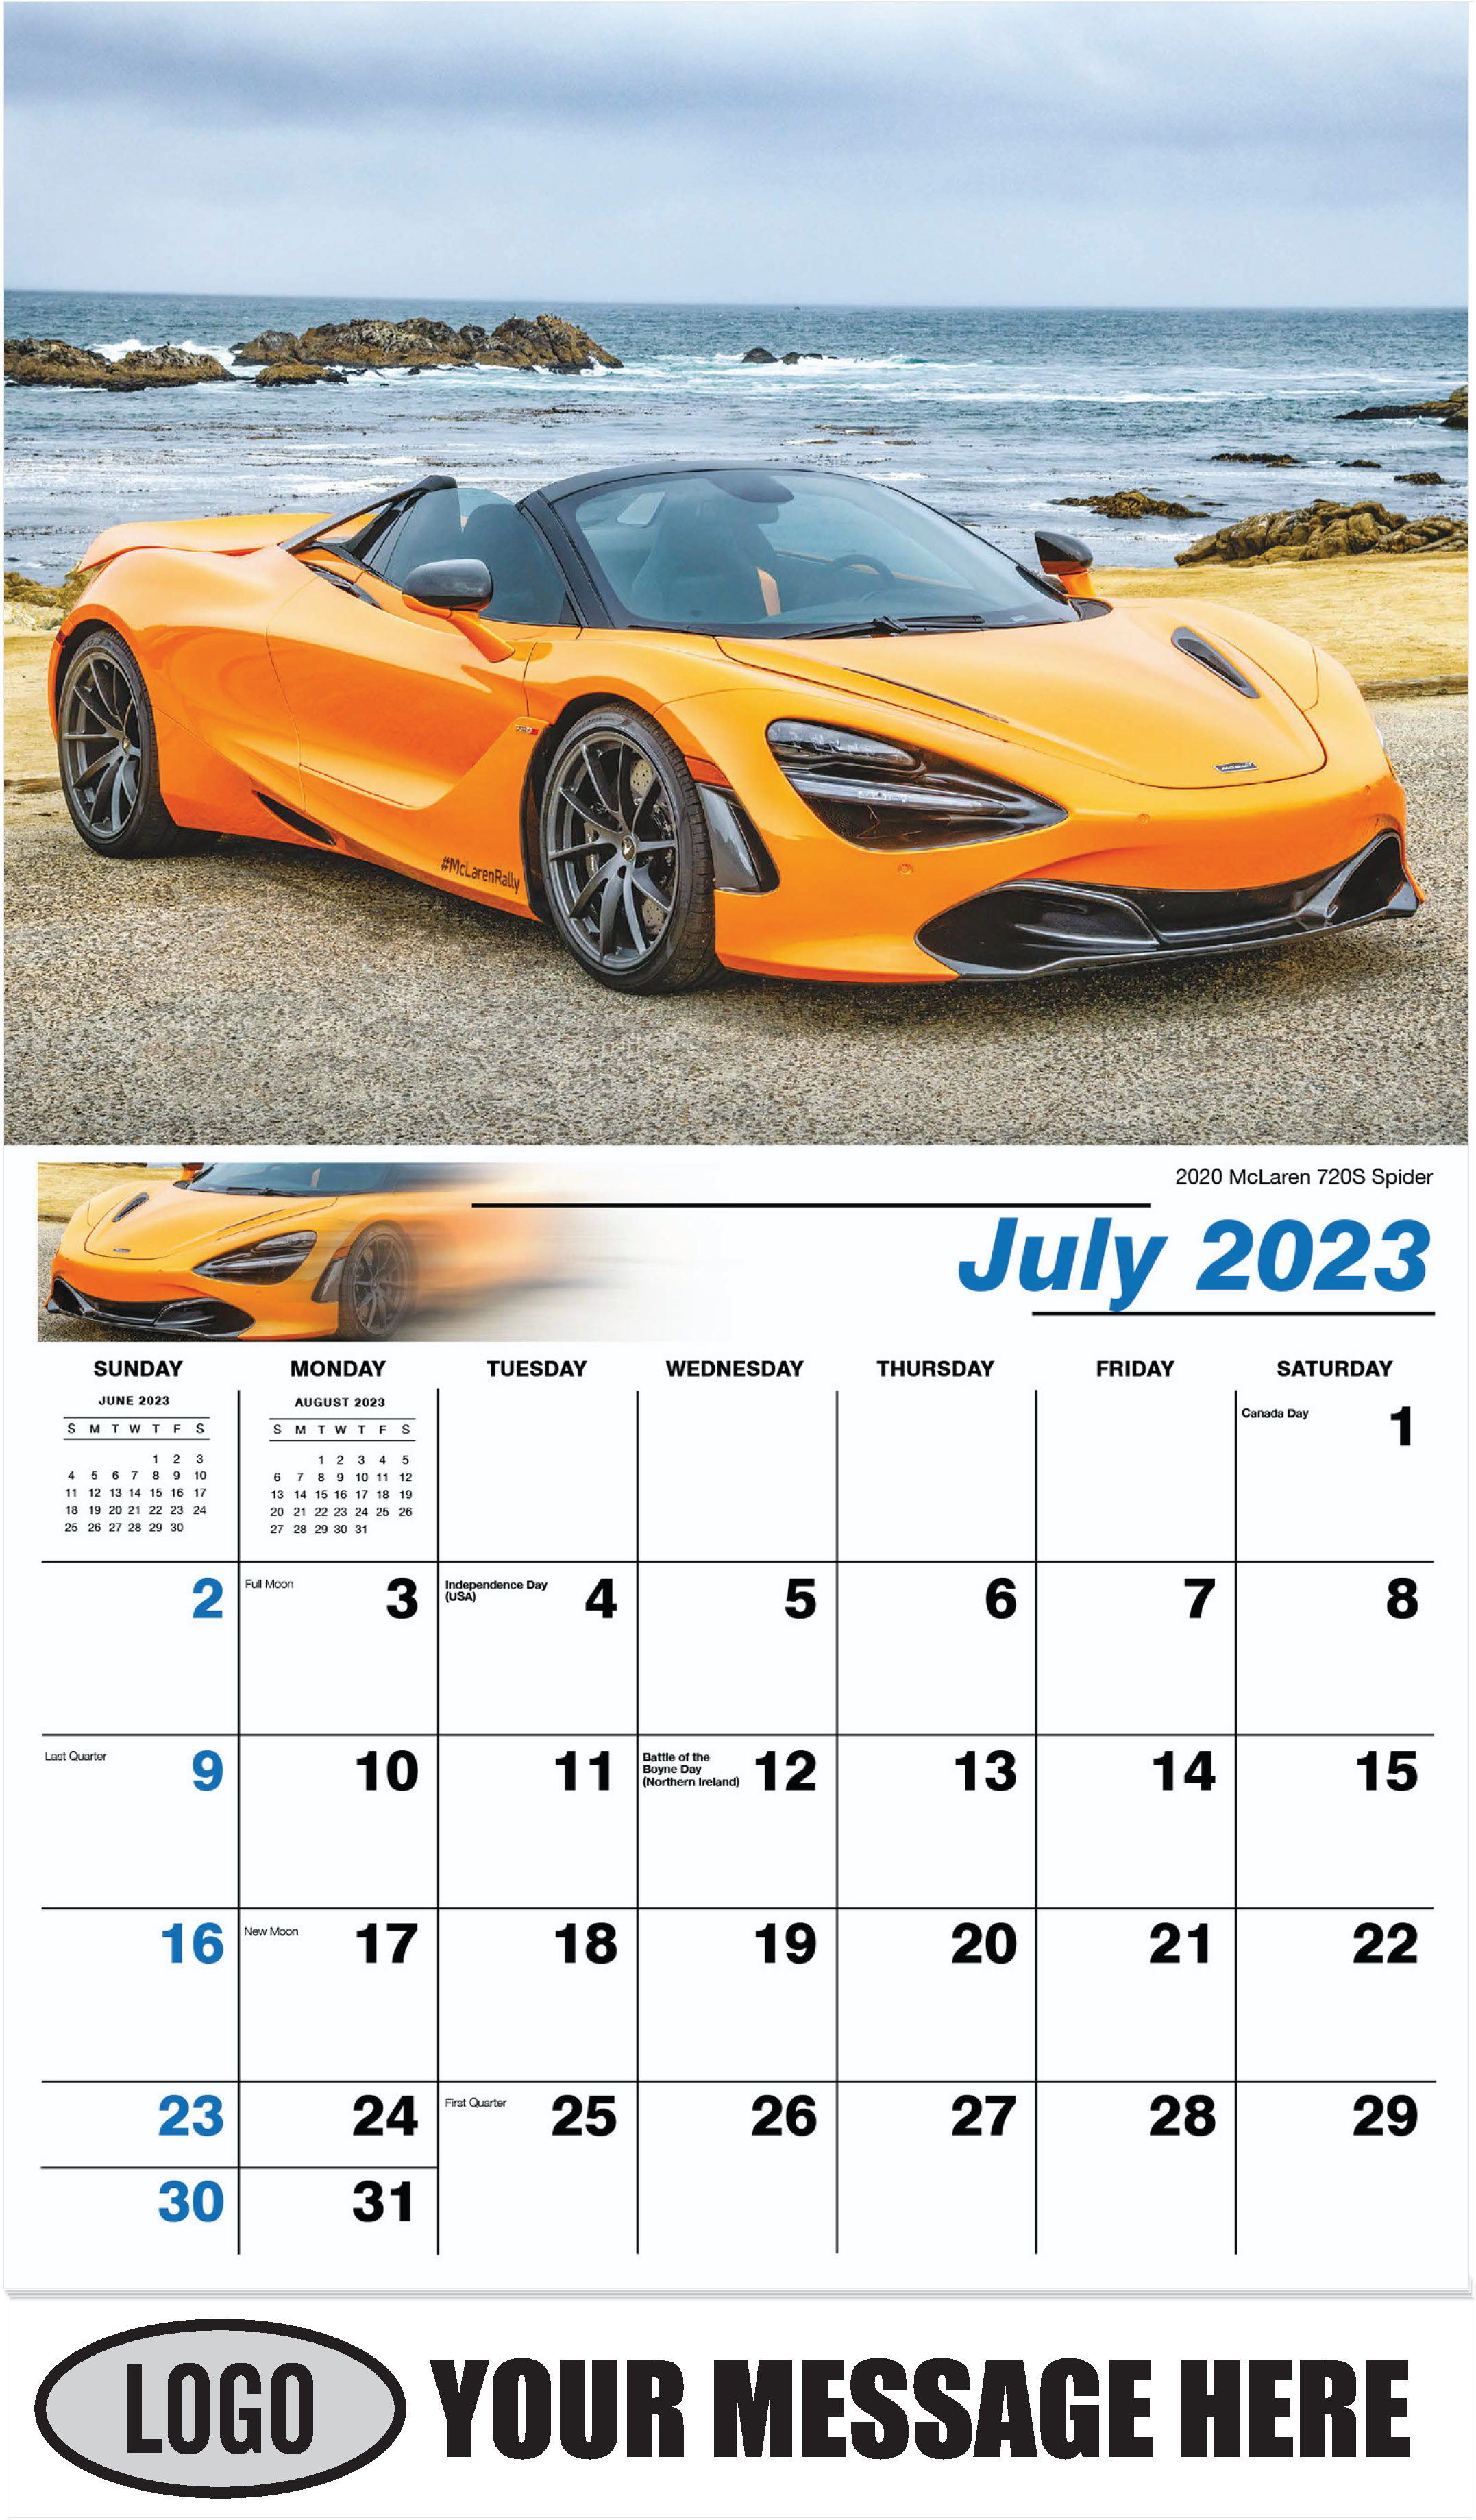 2020 McLaren 720S Spider - July - Exotic Cars 2023 Promotional Calendar